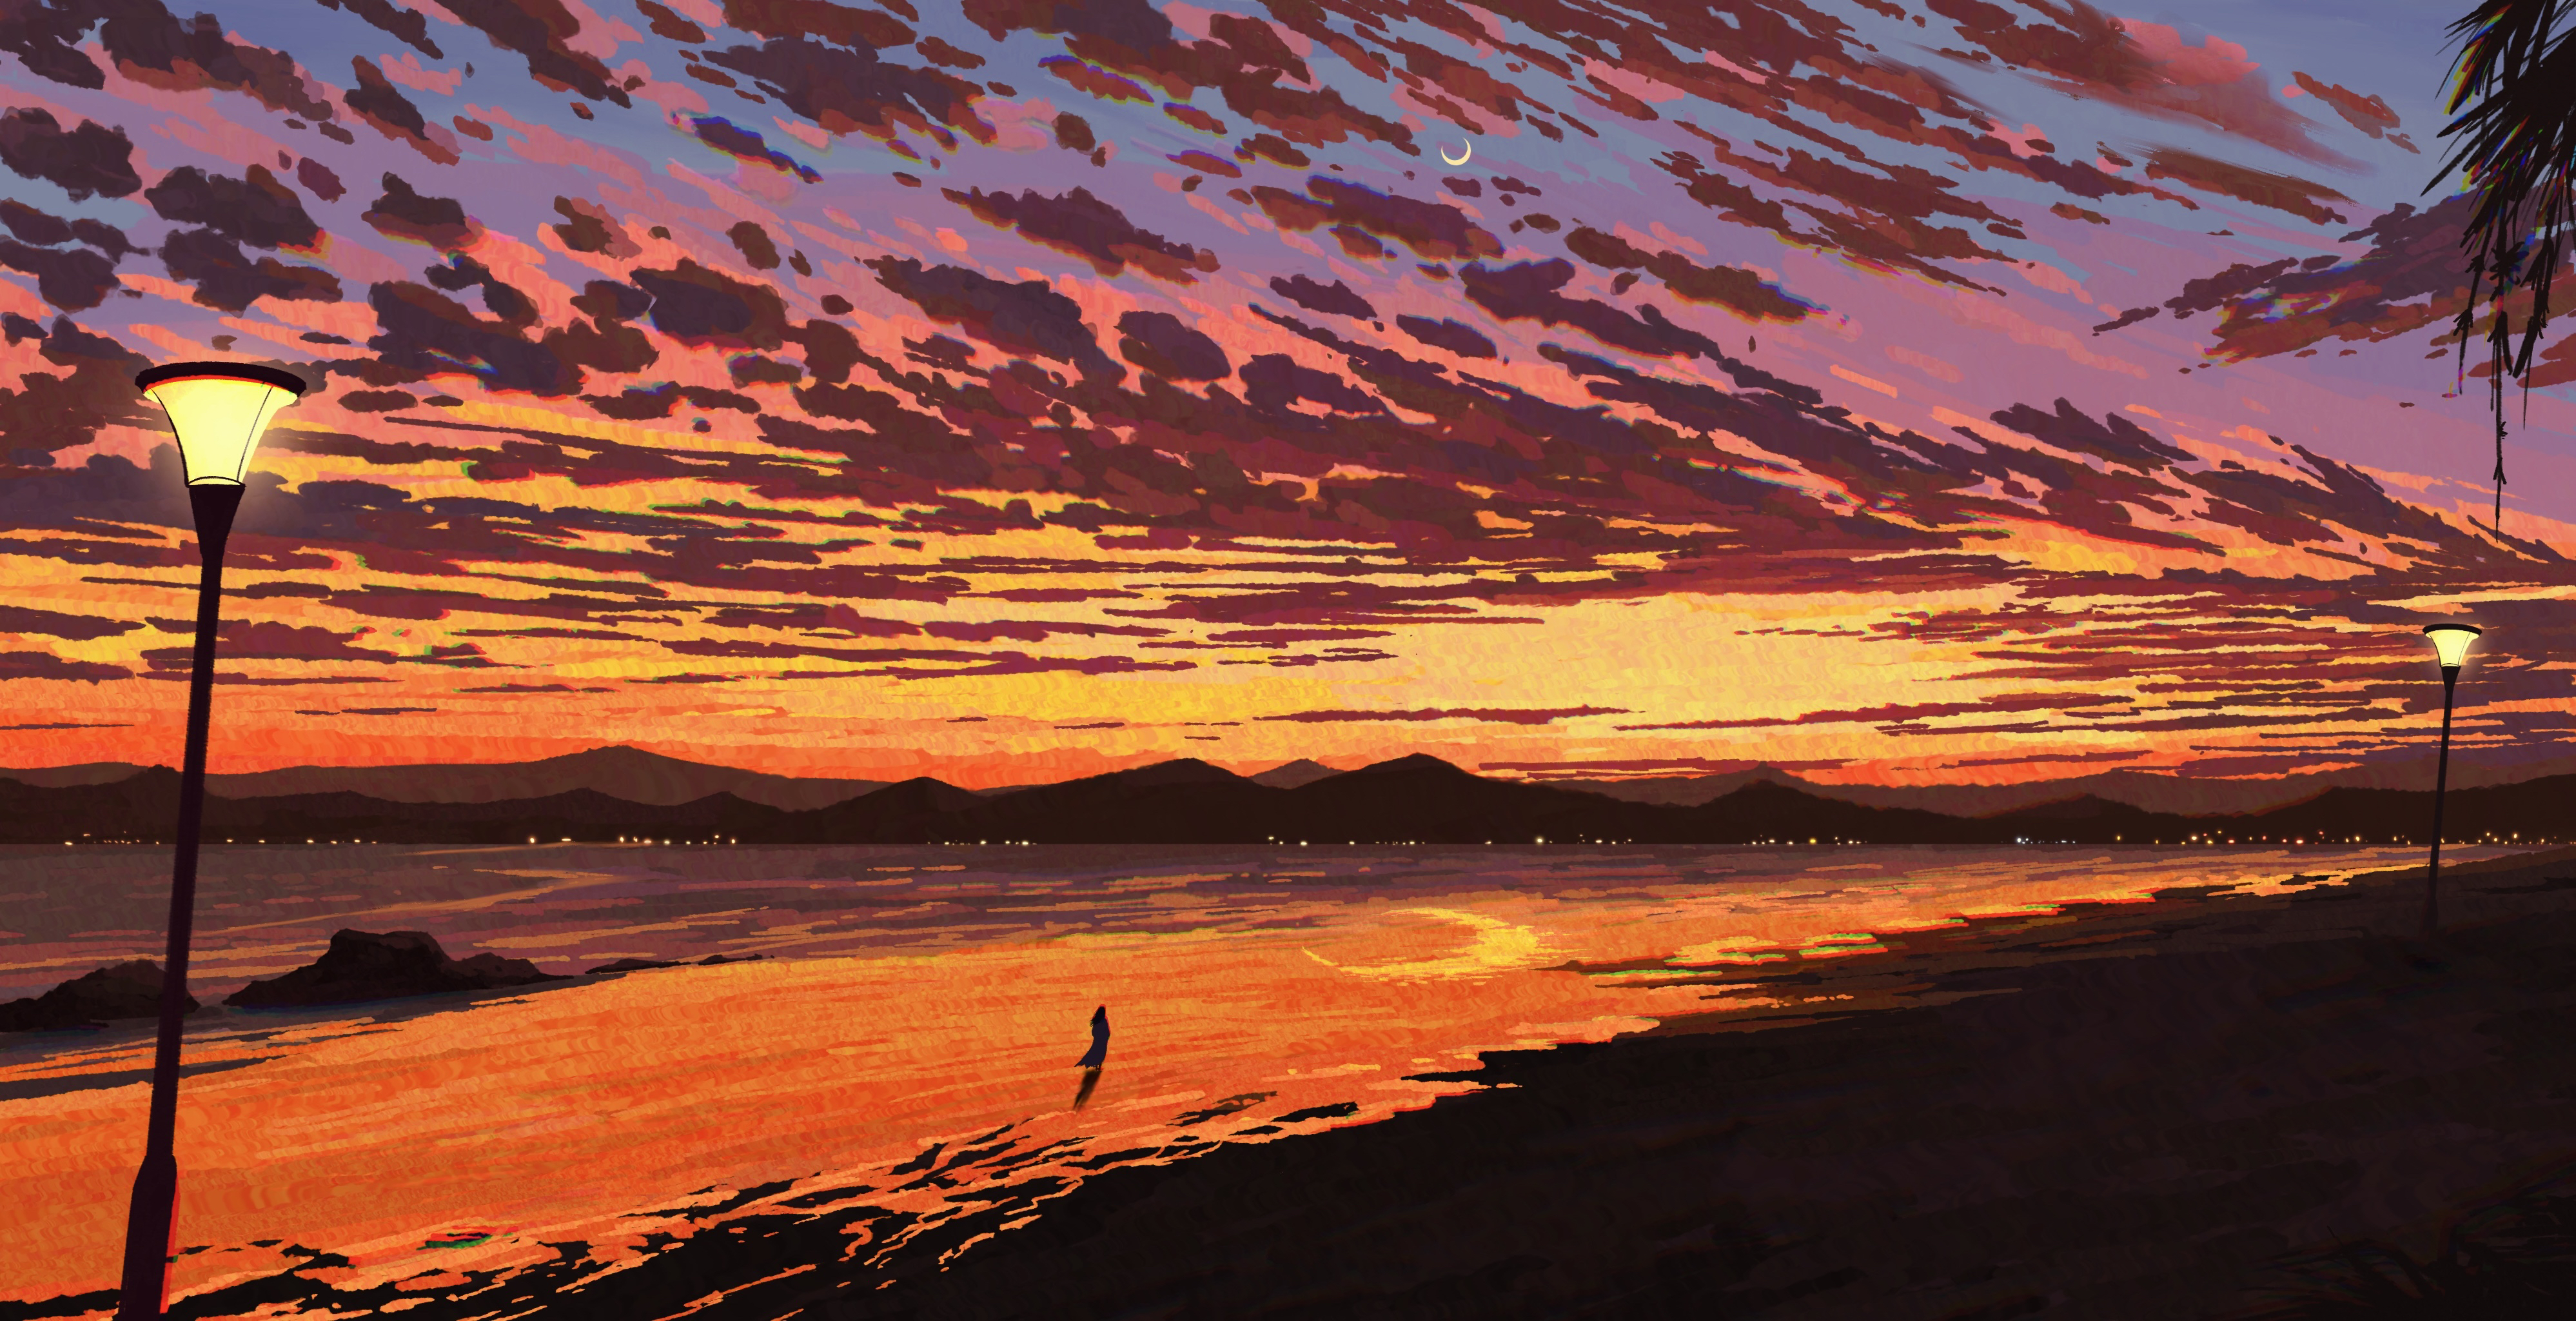 General 3995x2048 Fangpeii digital art artwork illustration sunset sea beach mountains clouds street light environment landscape sunset glow sky mountain chain